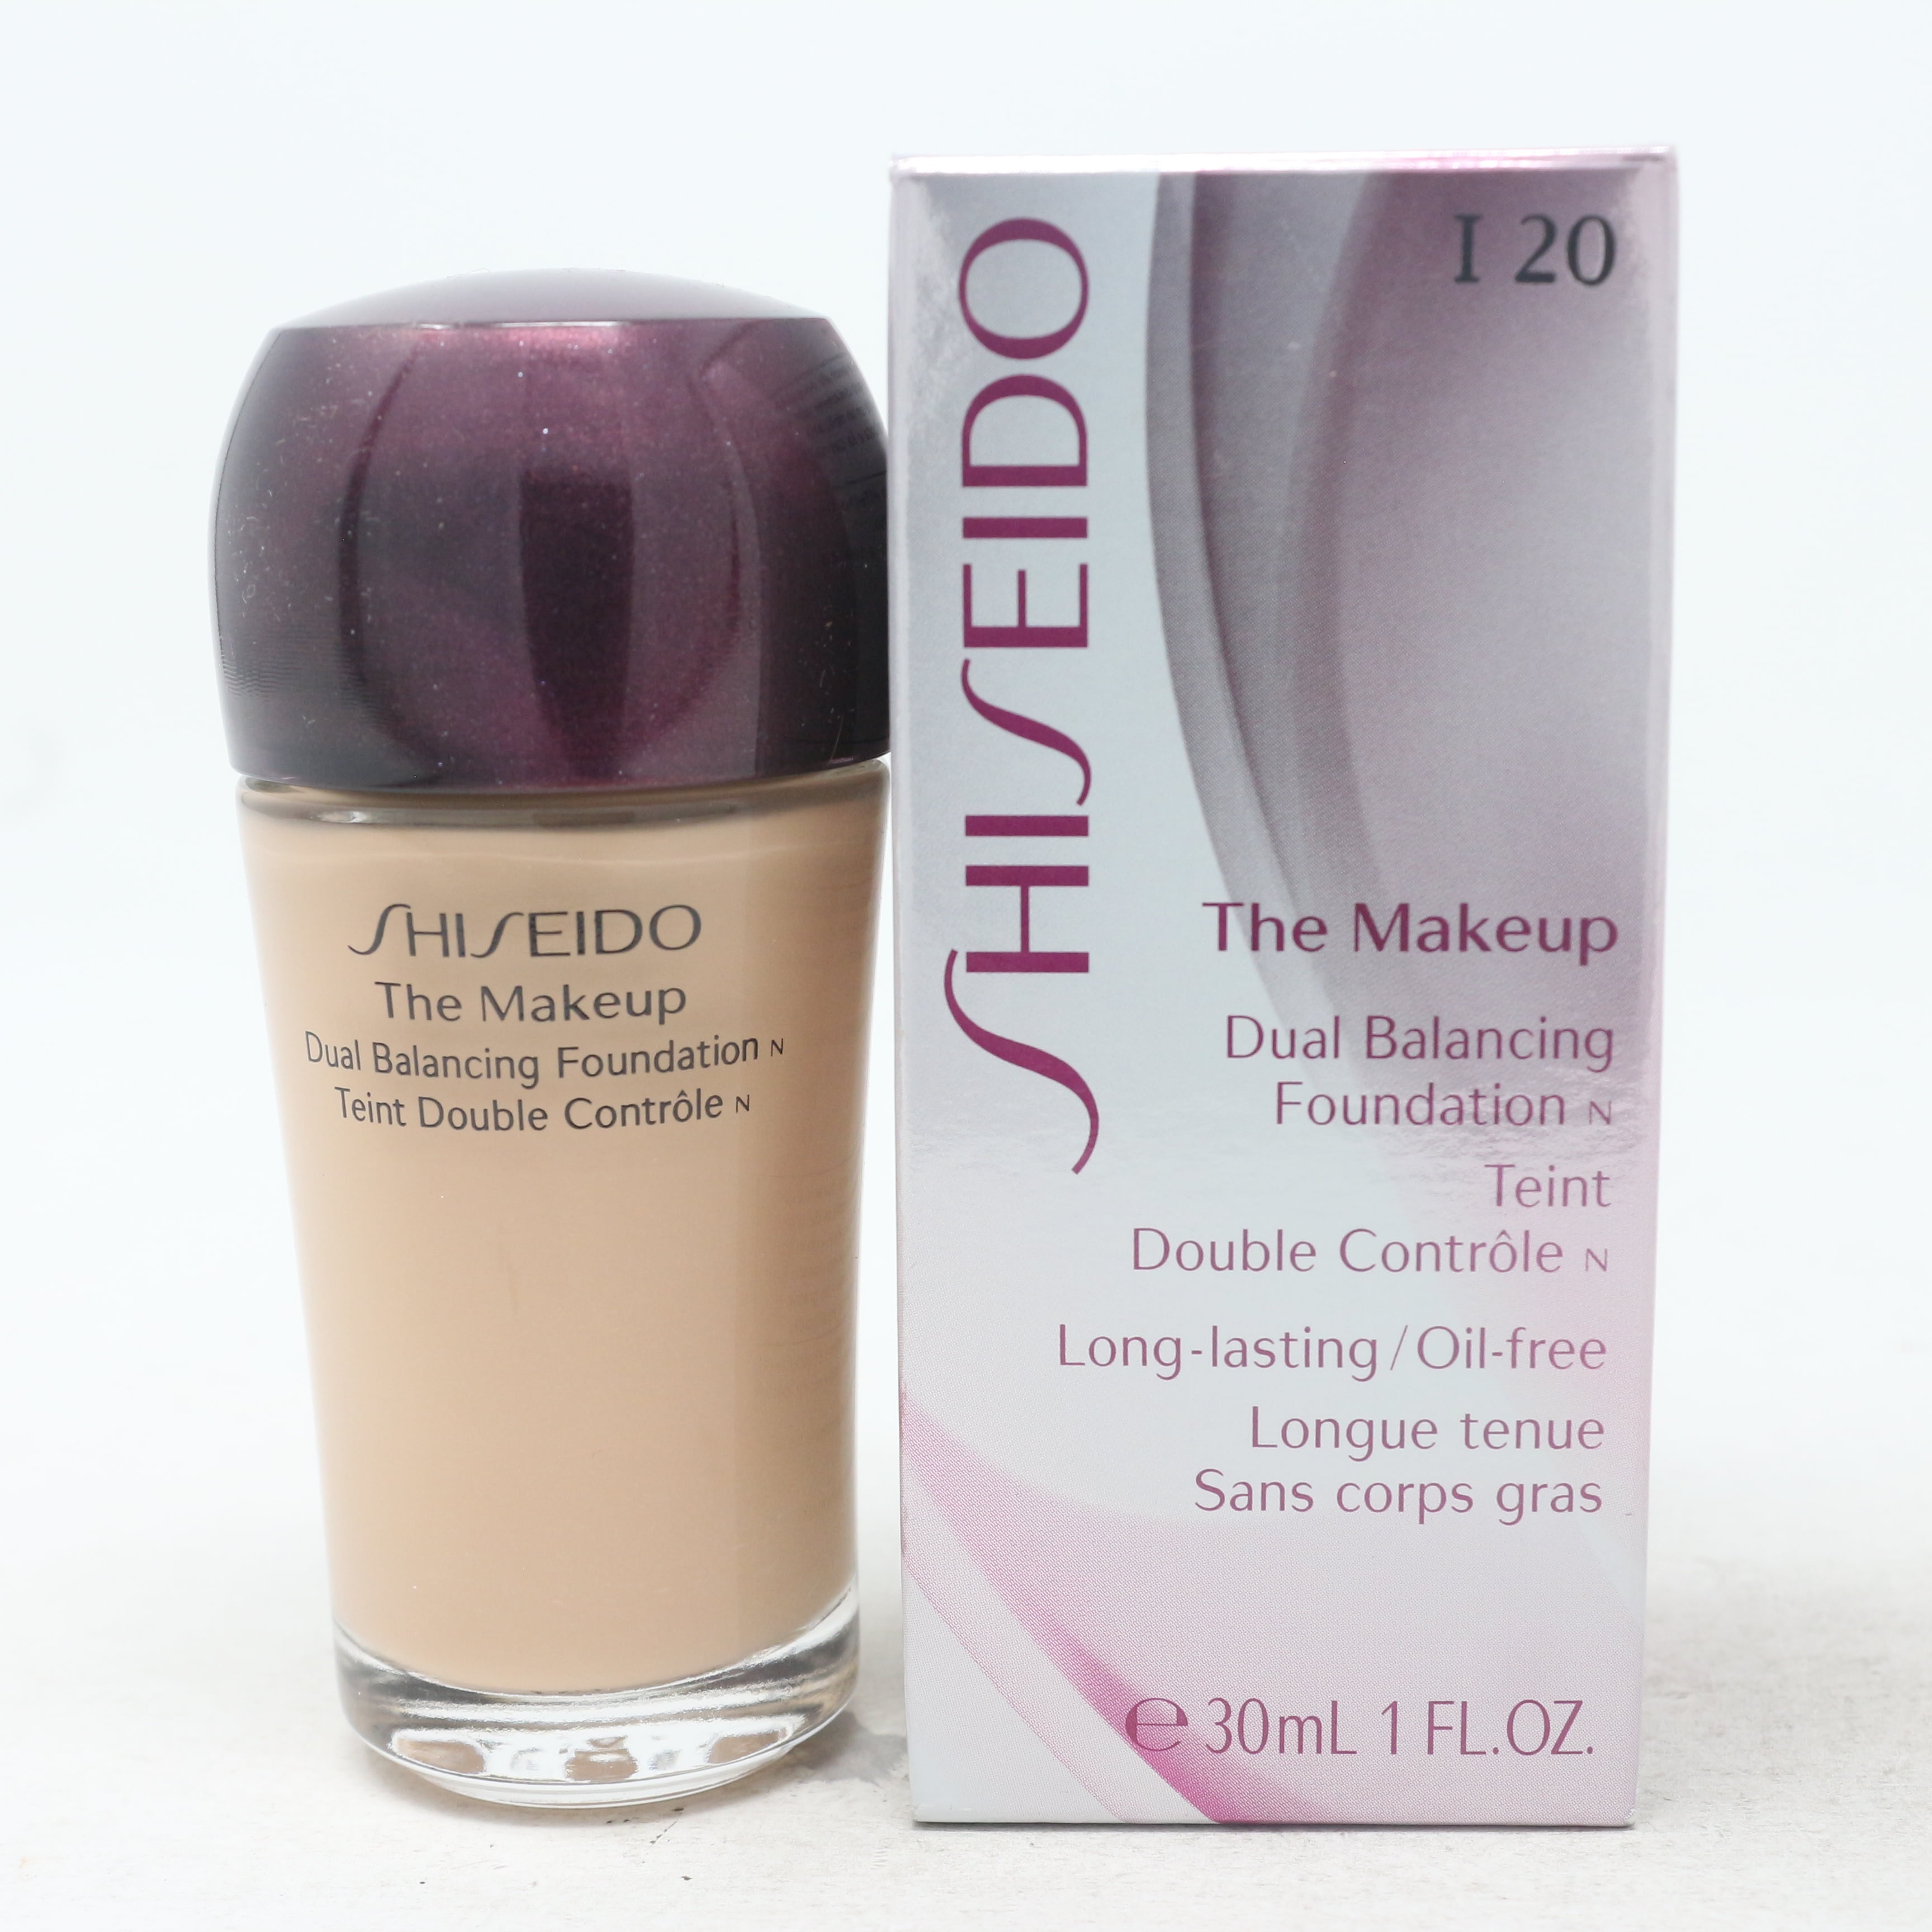 Shiseido The Makeup Dual Balancing Foundation 1oz I 20 Light Ivory New With Walmart.com